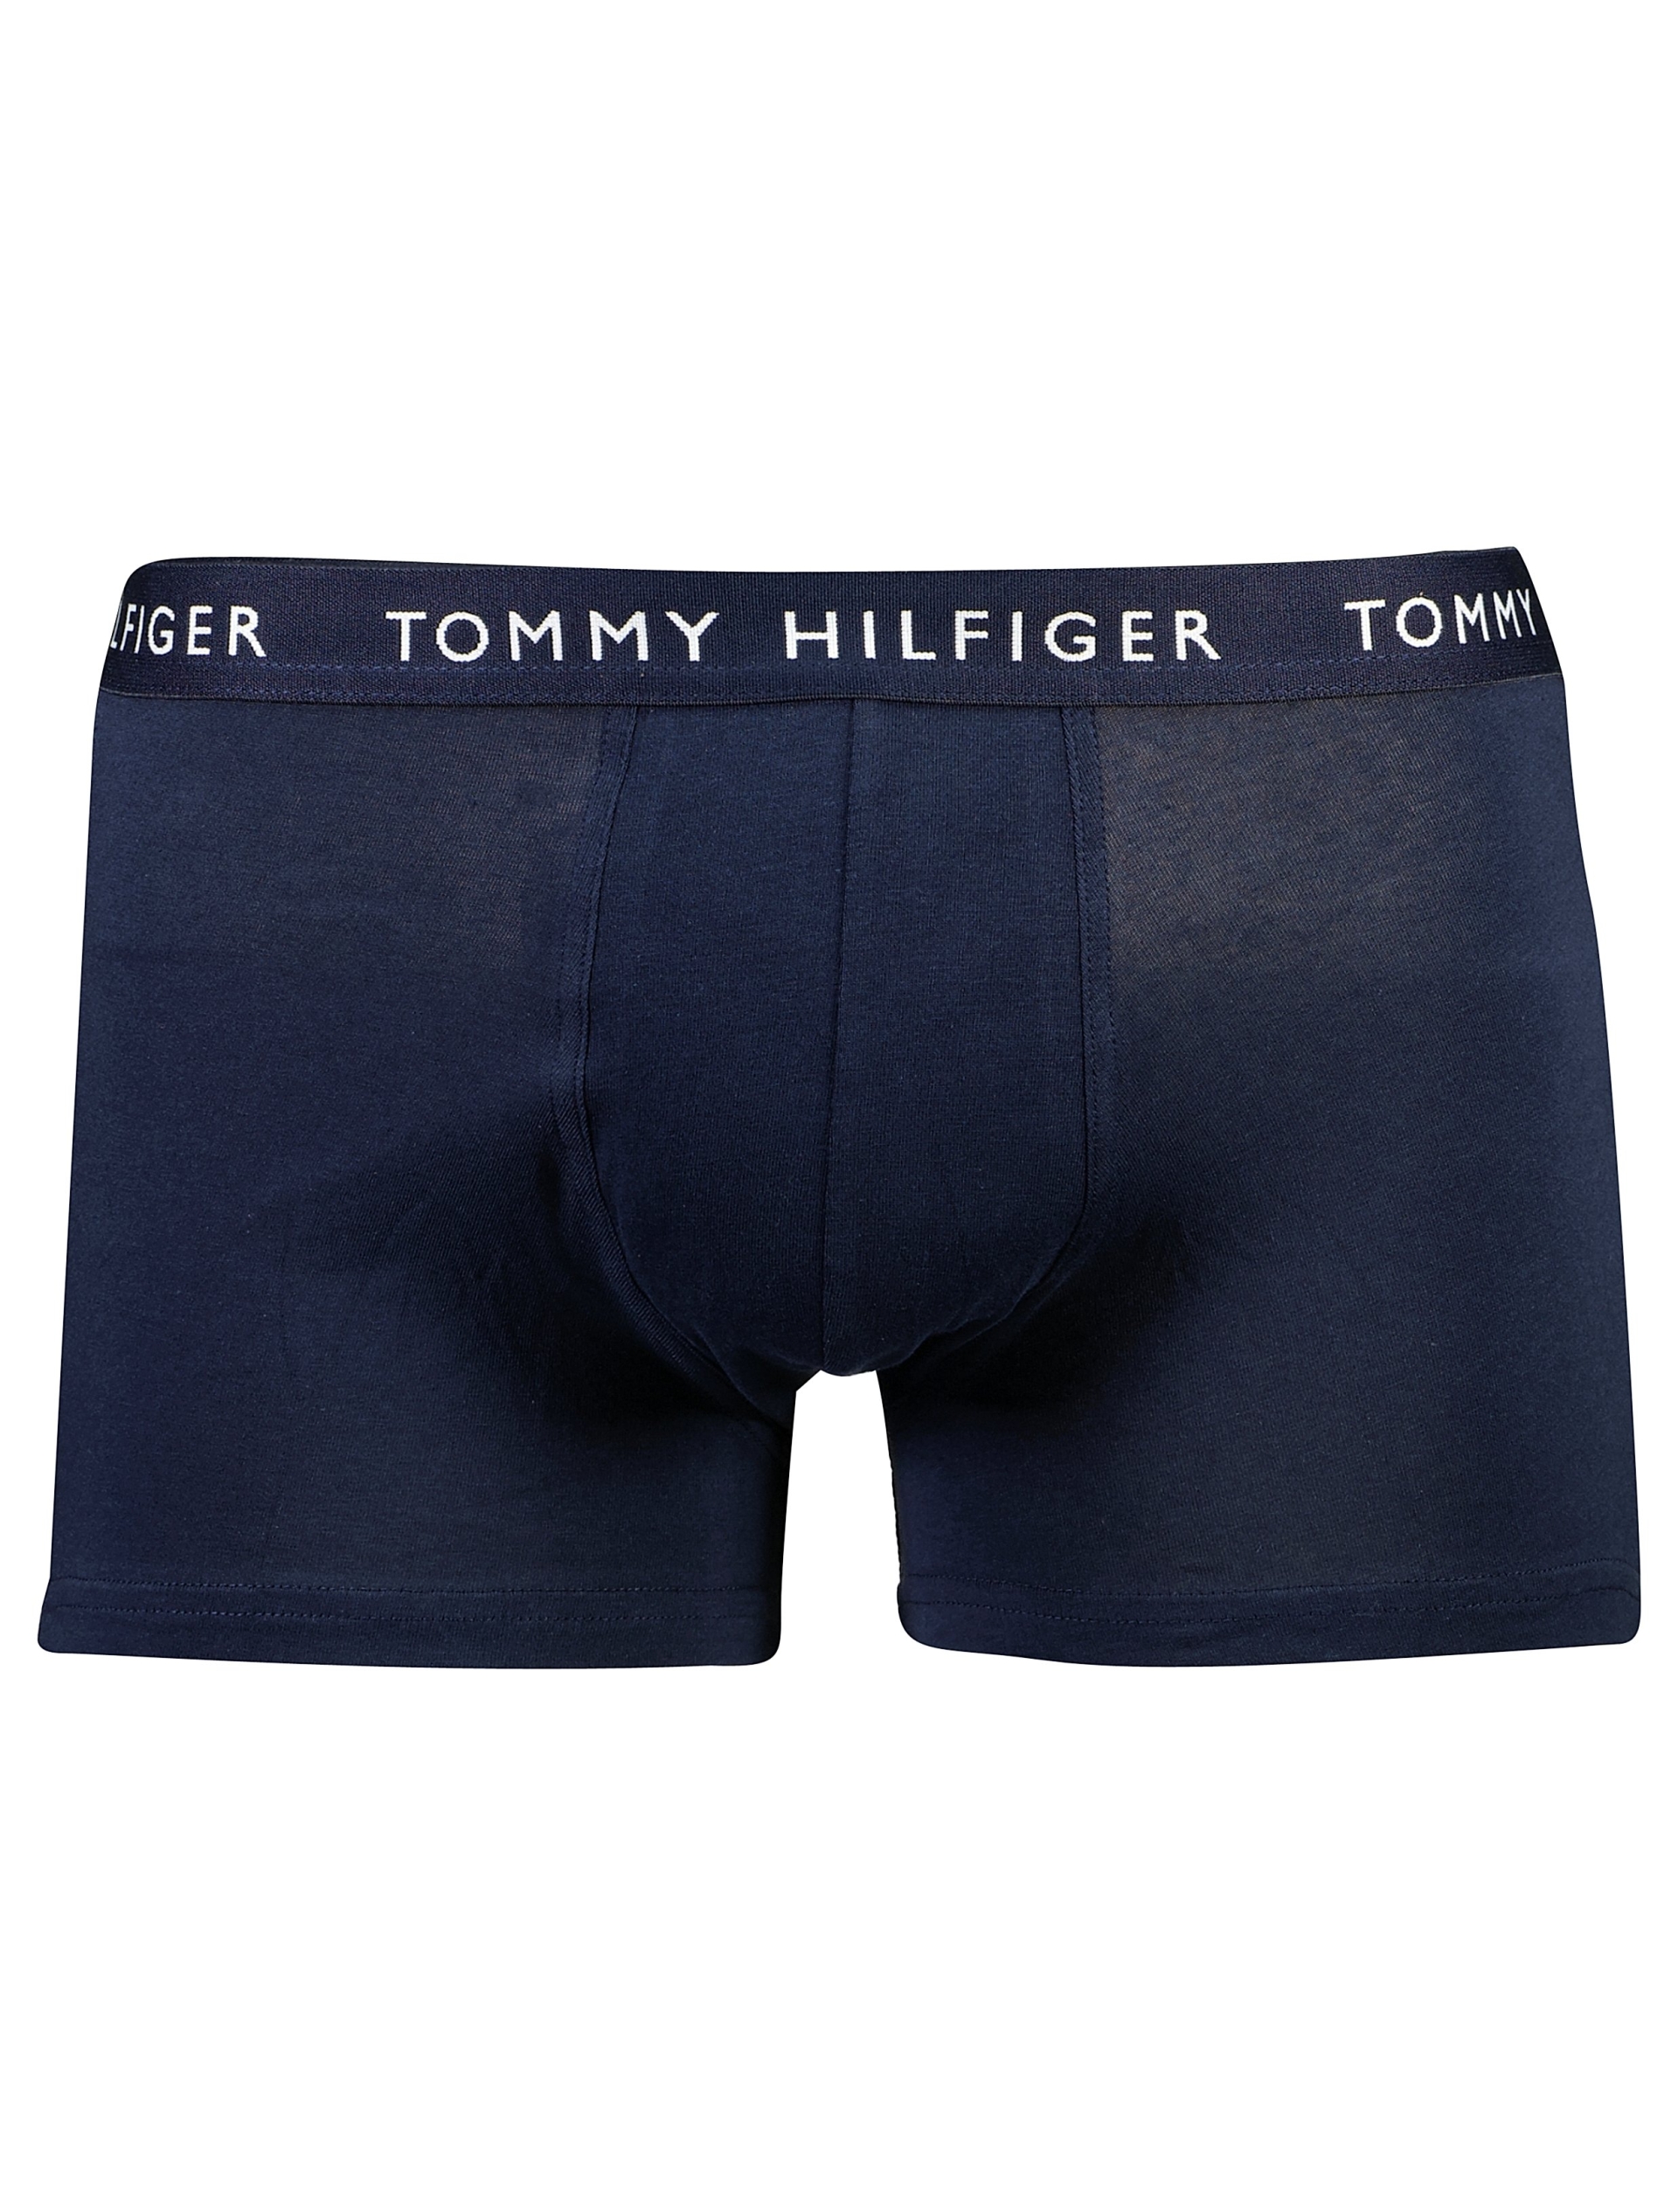 Tommy Hilfiger Tights blå / 0uj navy